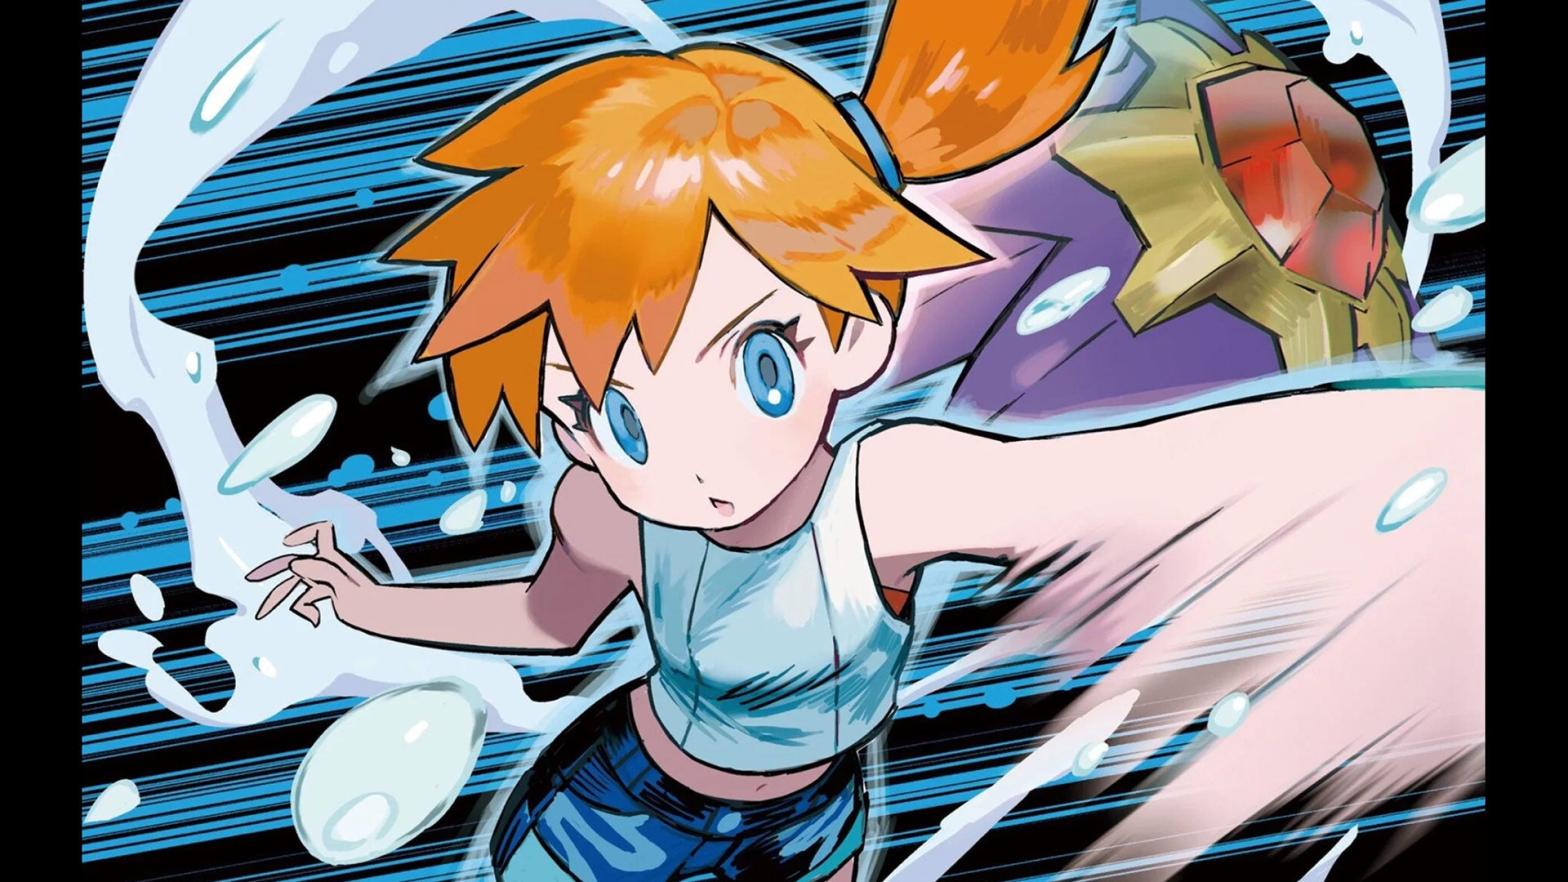 This art of Pokémon heroine Misty is by TCG artist Tokiya. (Image: The Pokémon Company / Kotaku)